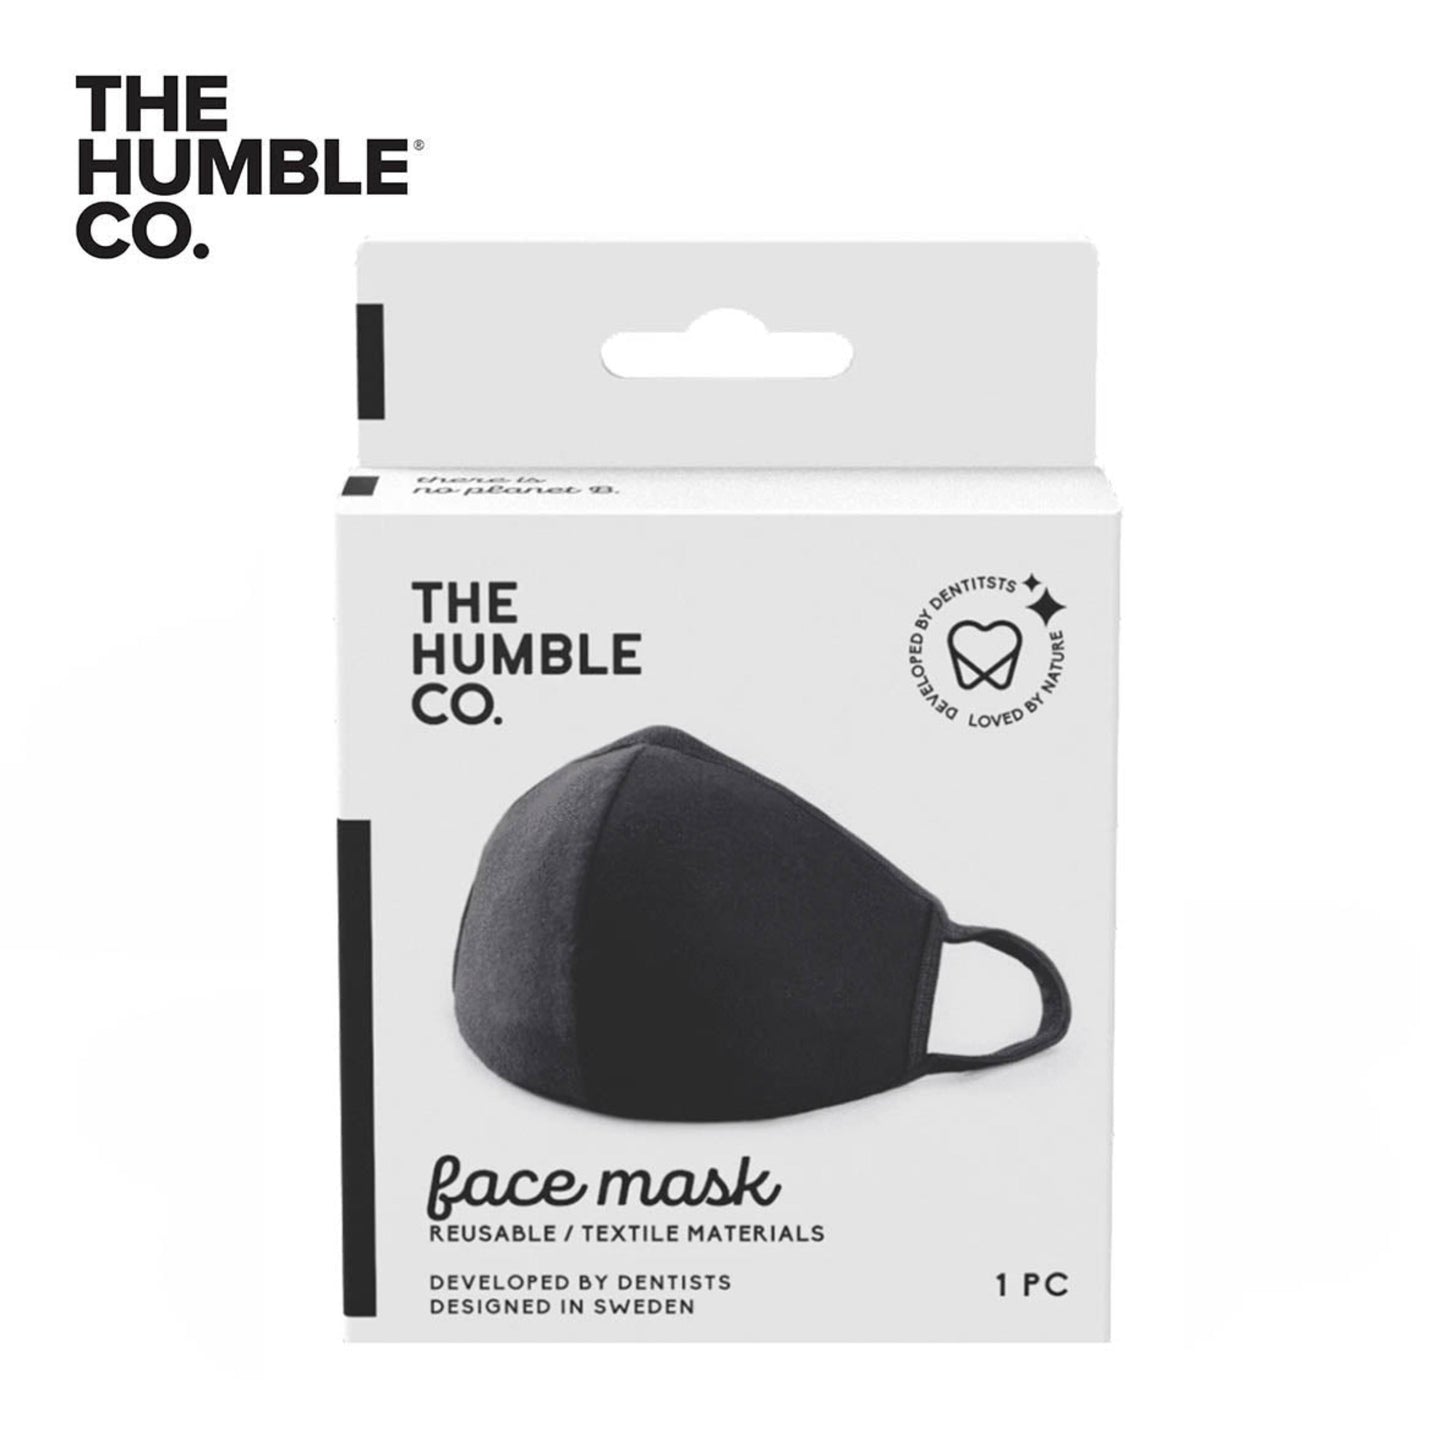 THE HUMBLE & CO Reusable Face Mask, Black (4620447121473)